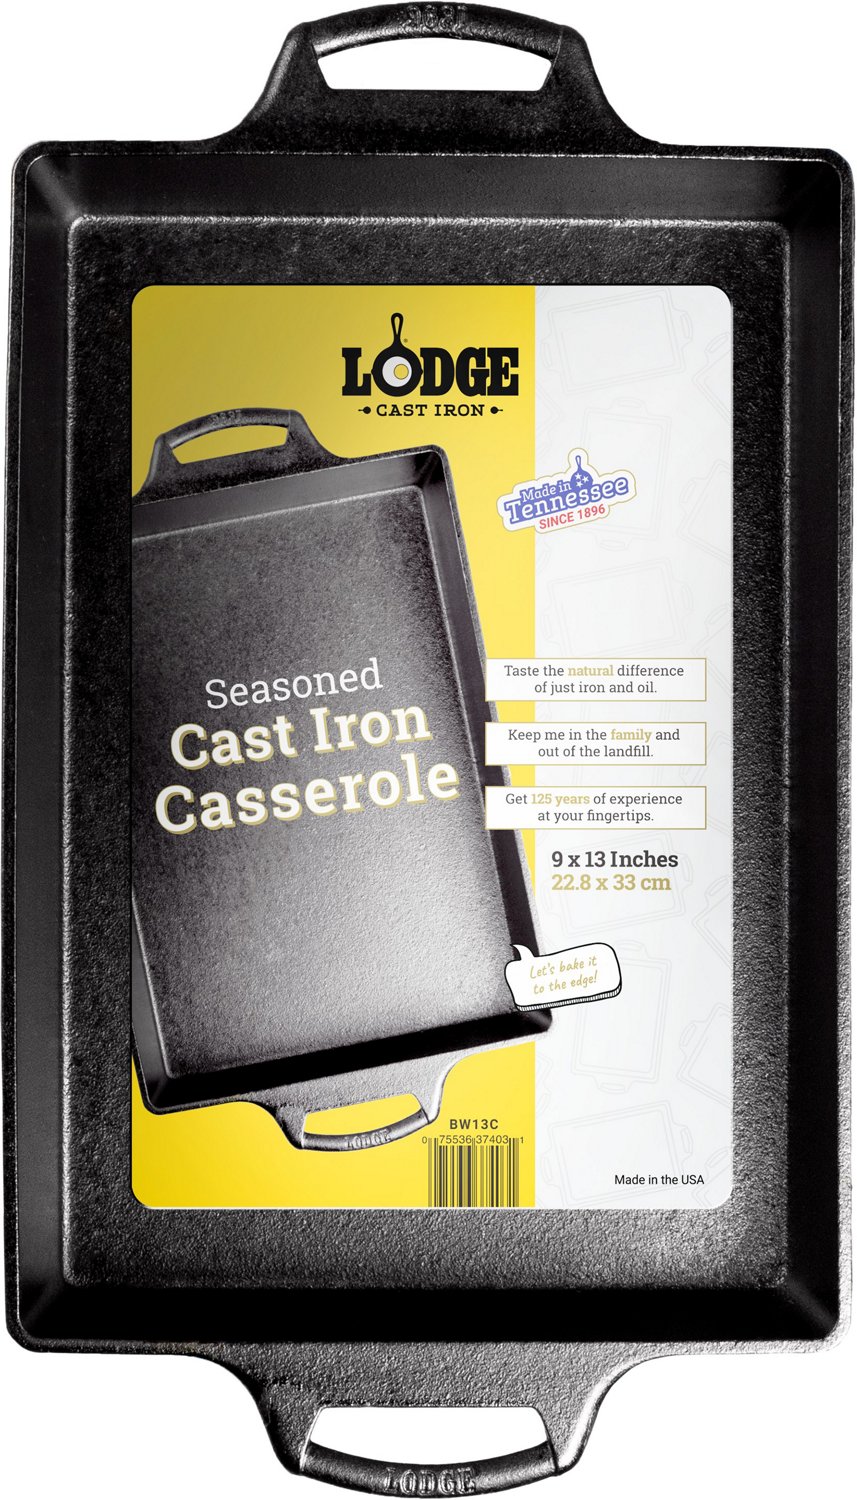 Lodge 9 x 13 inch Seasoned Cast Iron Casserole